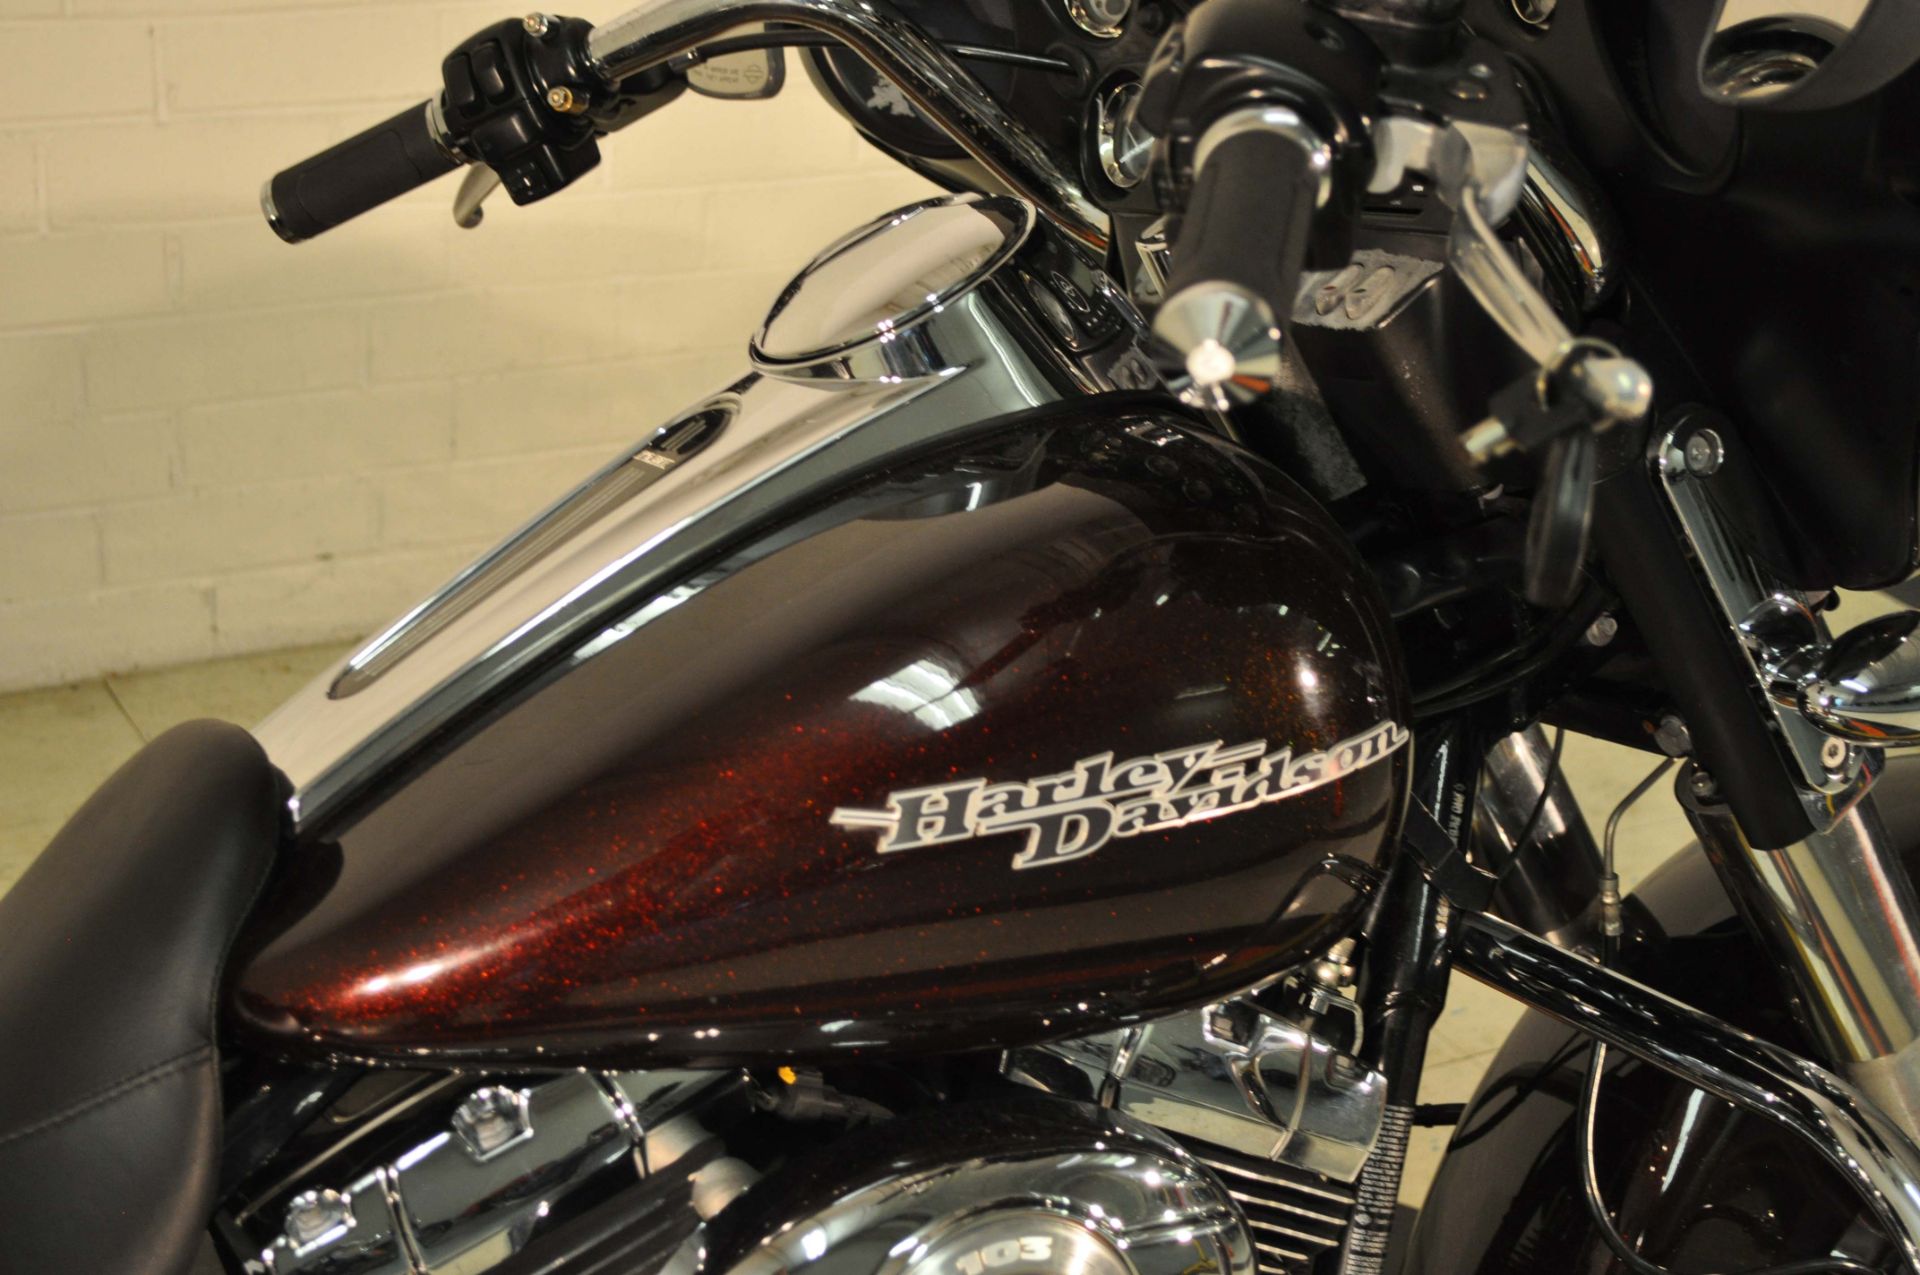 2011 Harley-Davidson Street Glide® in Winston Salem, North Carolina - Photo 14